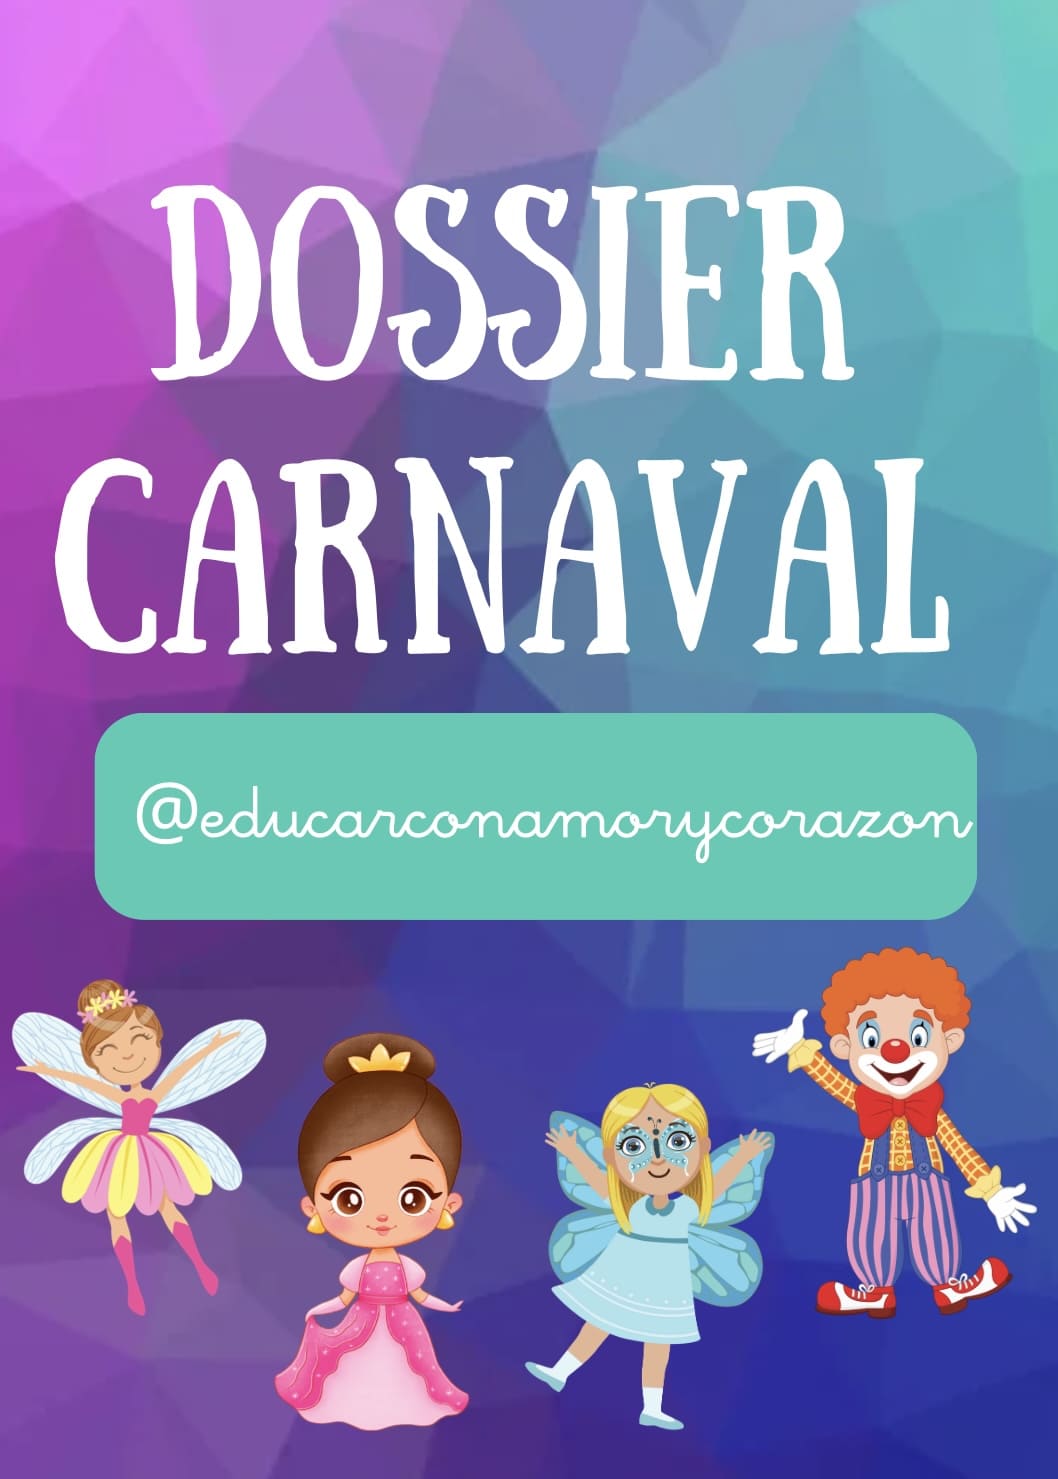 Dossier Carnaval